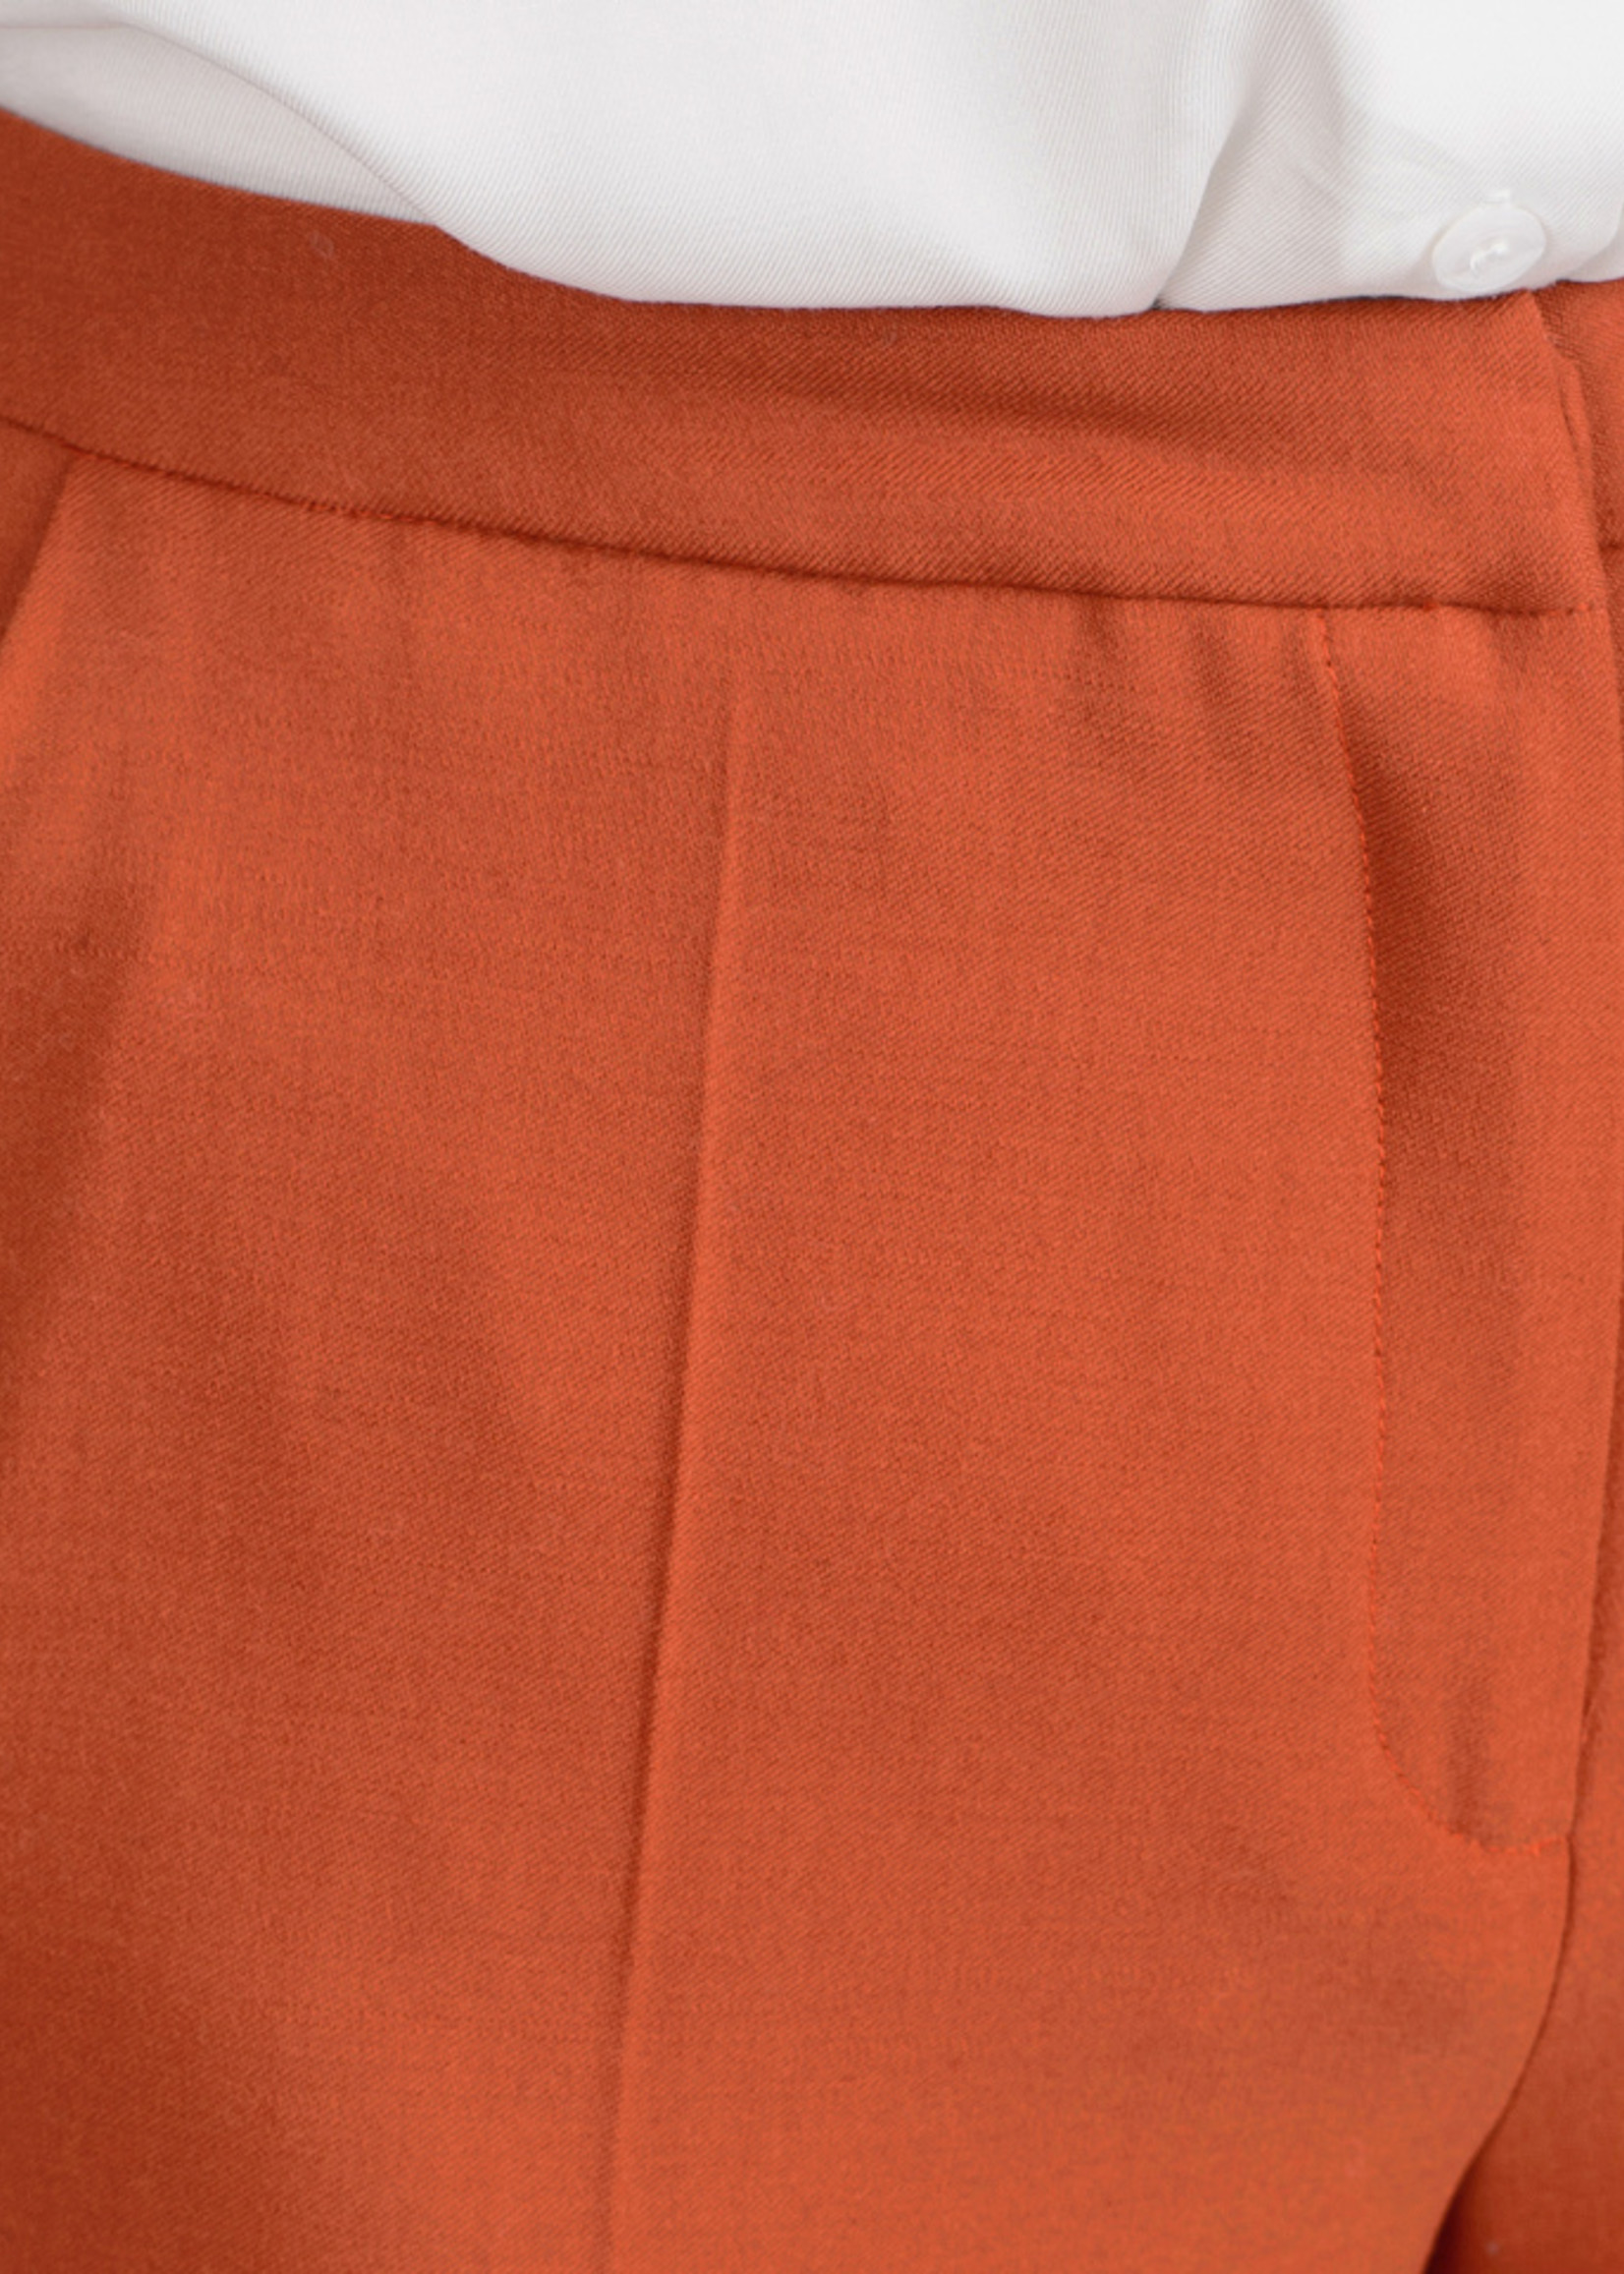 Pants WANDA | Rusty orange